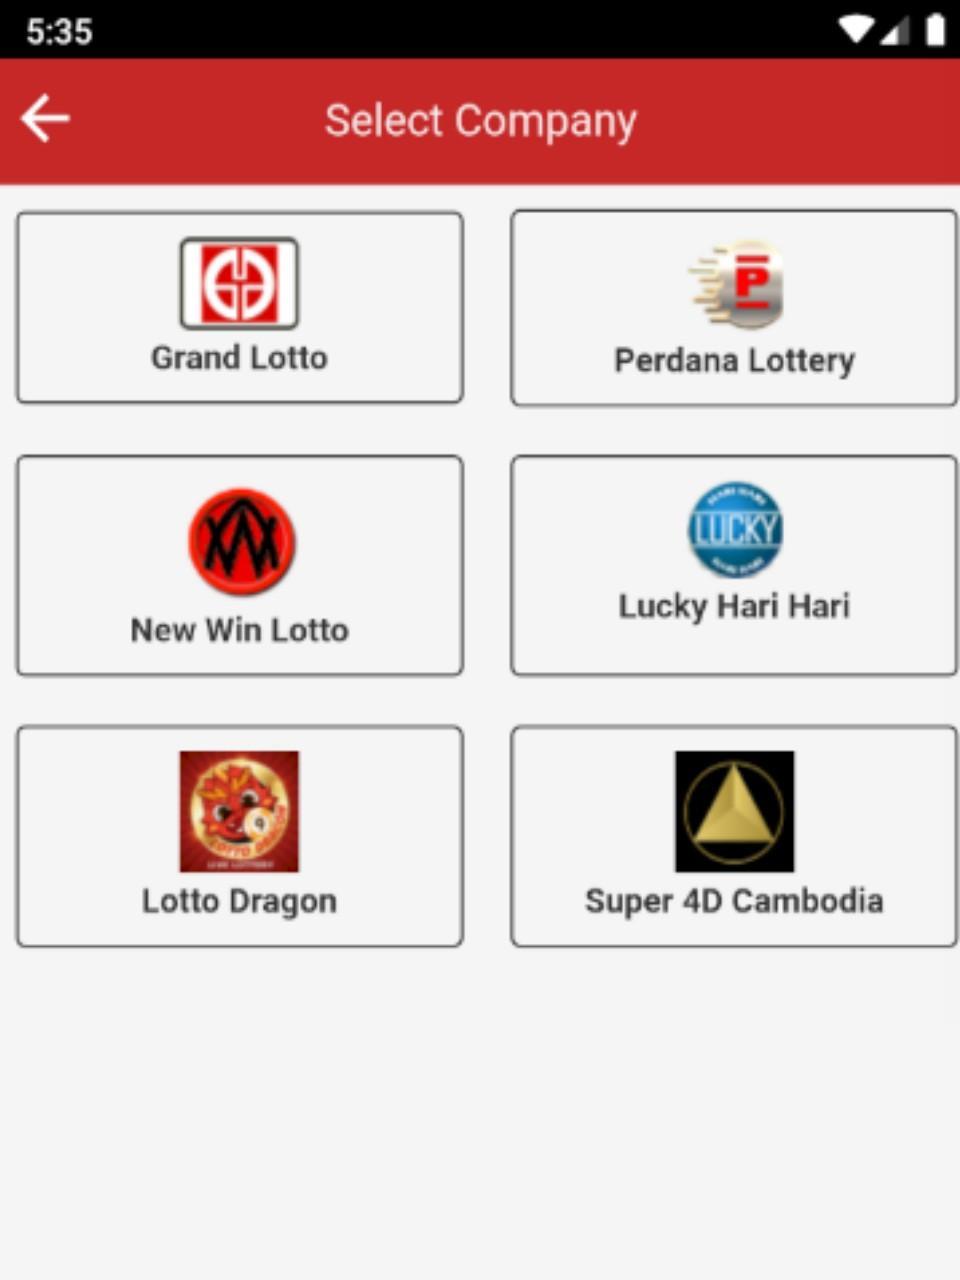 Lotto 4d kemboja